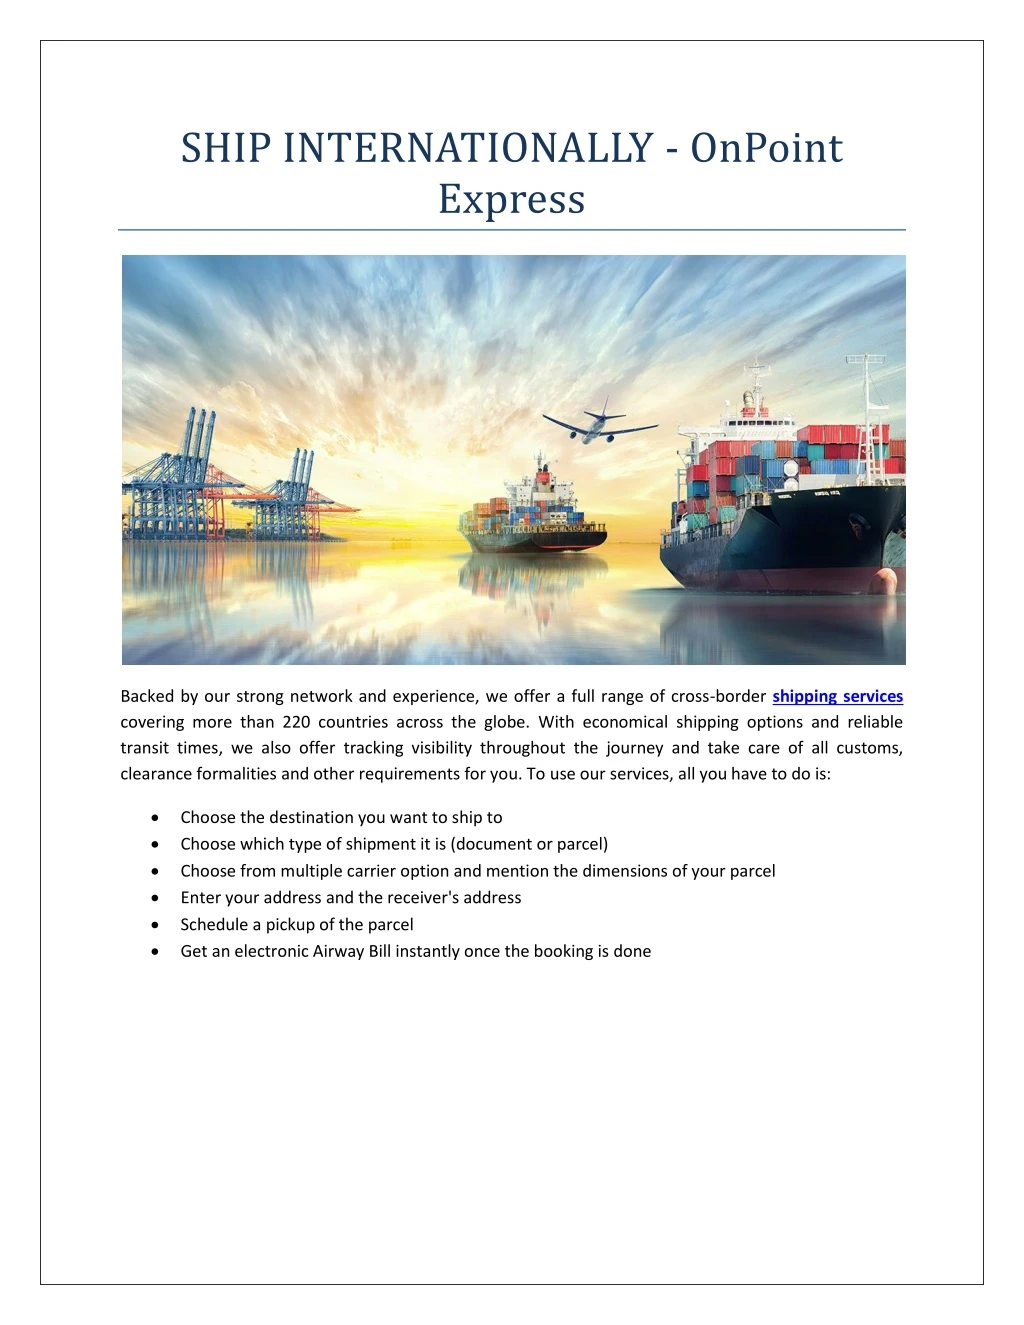 ship internationally onpoint express